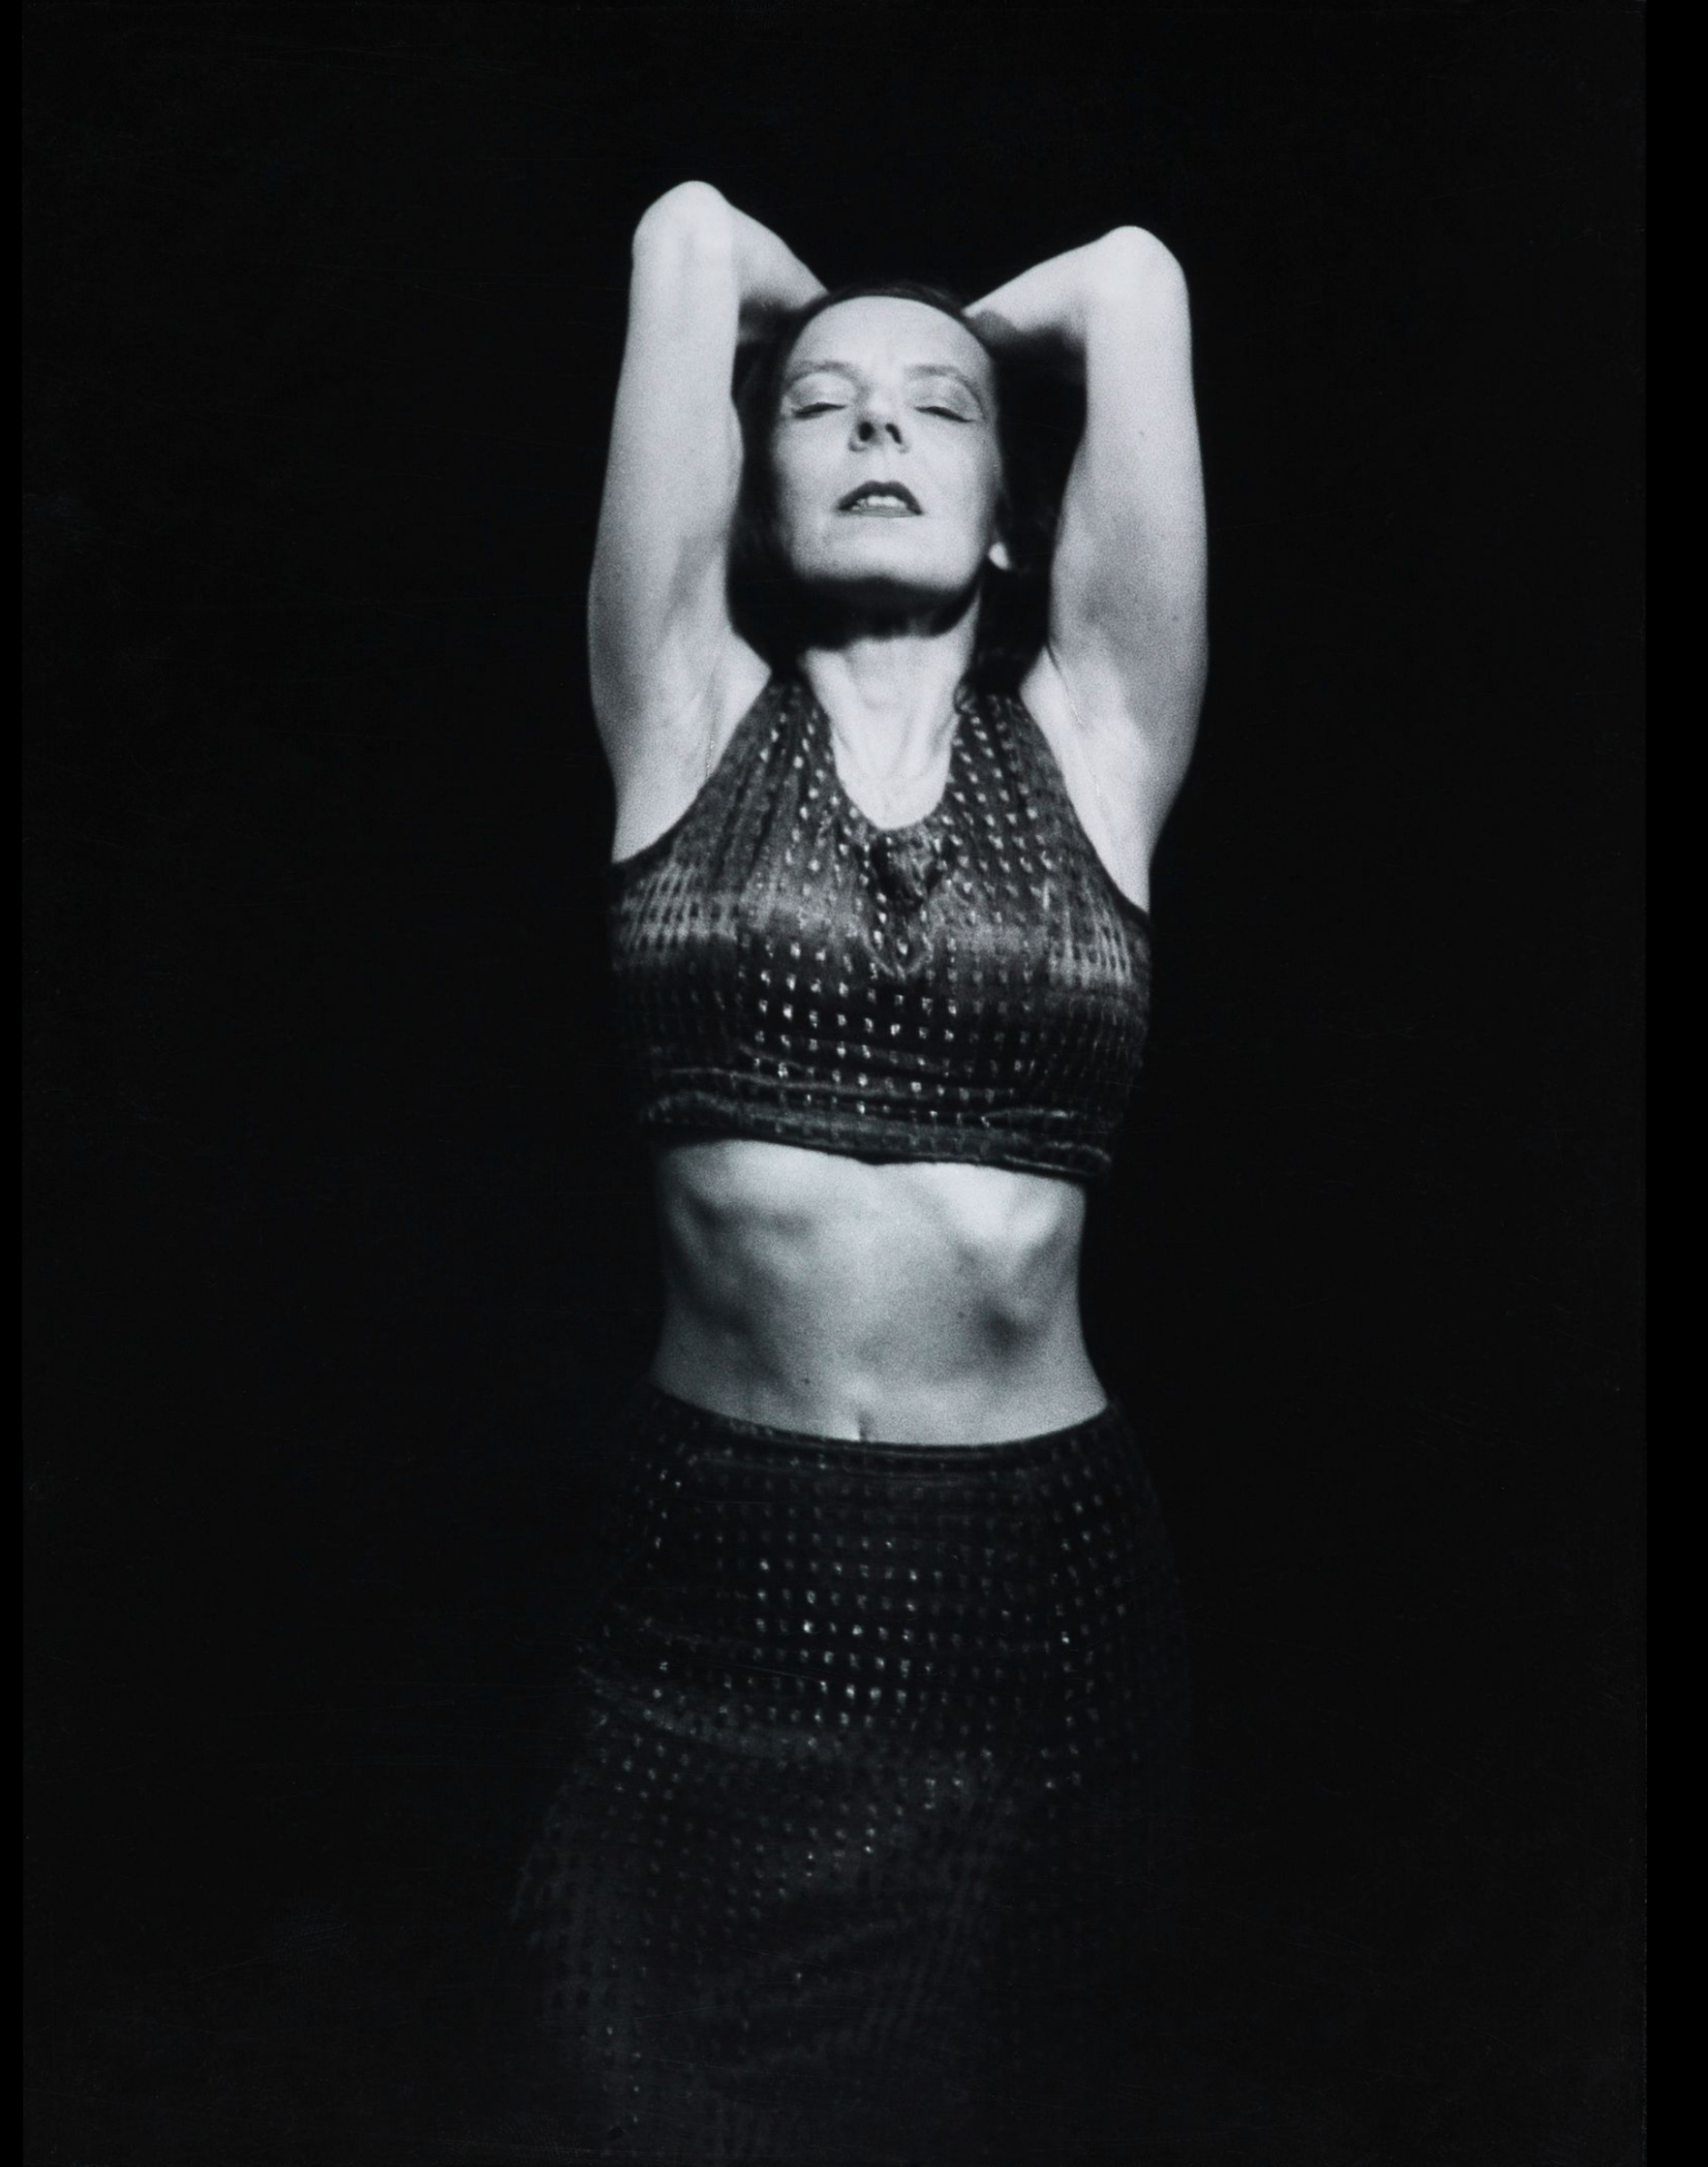 Liselotte Strelow :: Bewegungsstudien. Gret Palucca beim Ausdruckstanz | Movement studies. Gret Palucca expressive dance, 1947. | src LVR LandesMuseum · Deutsche Fotothek